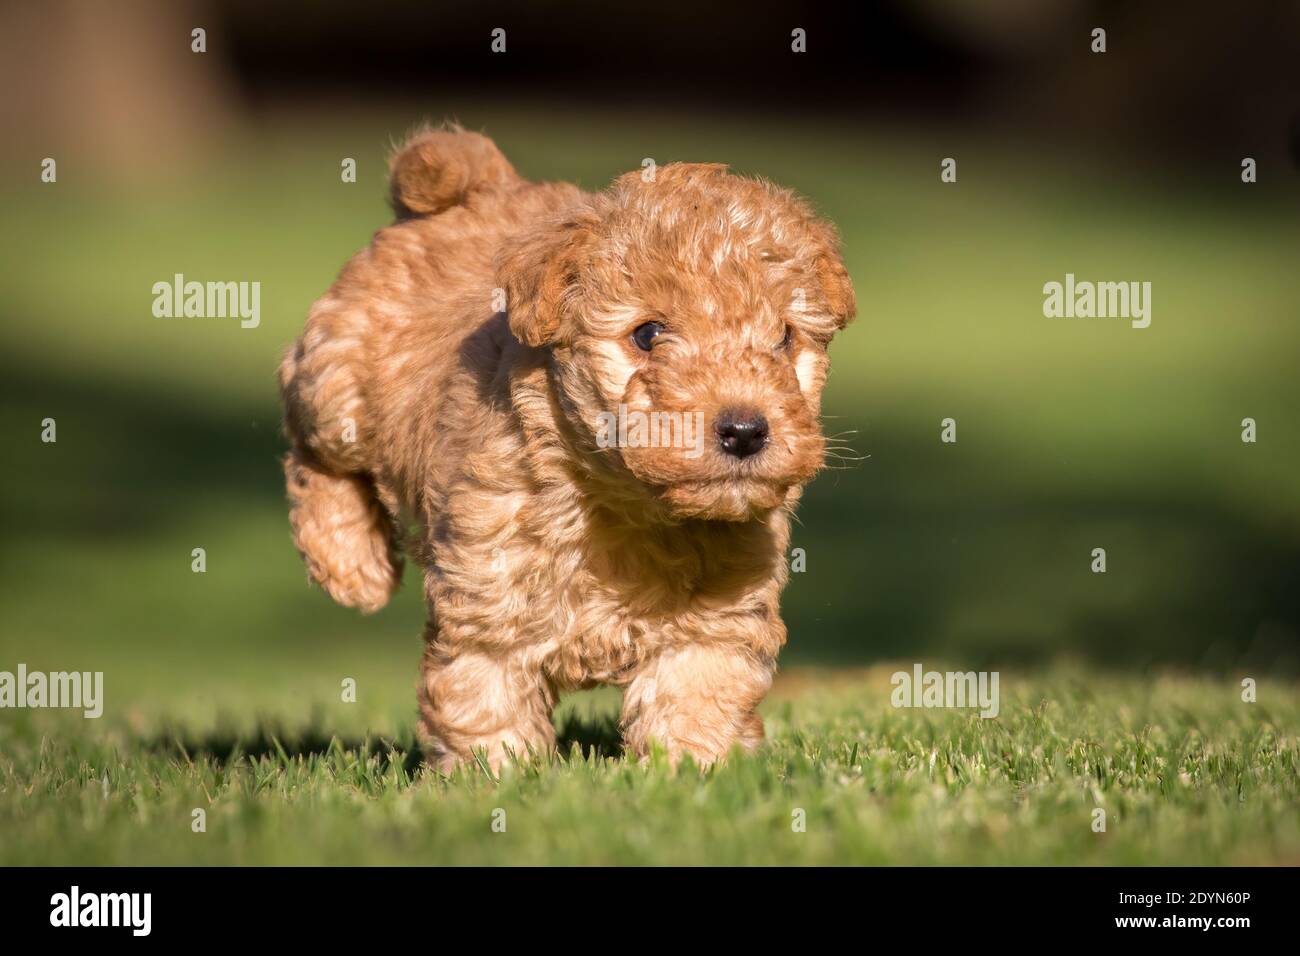 Cute red Lakeland Terrier puppy running on green grass. Stock Photo